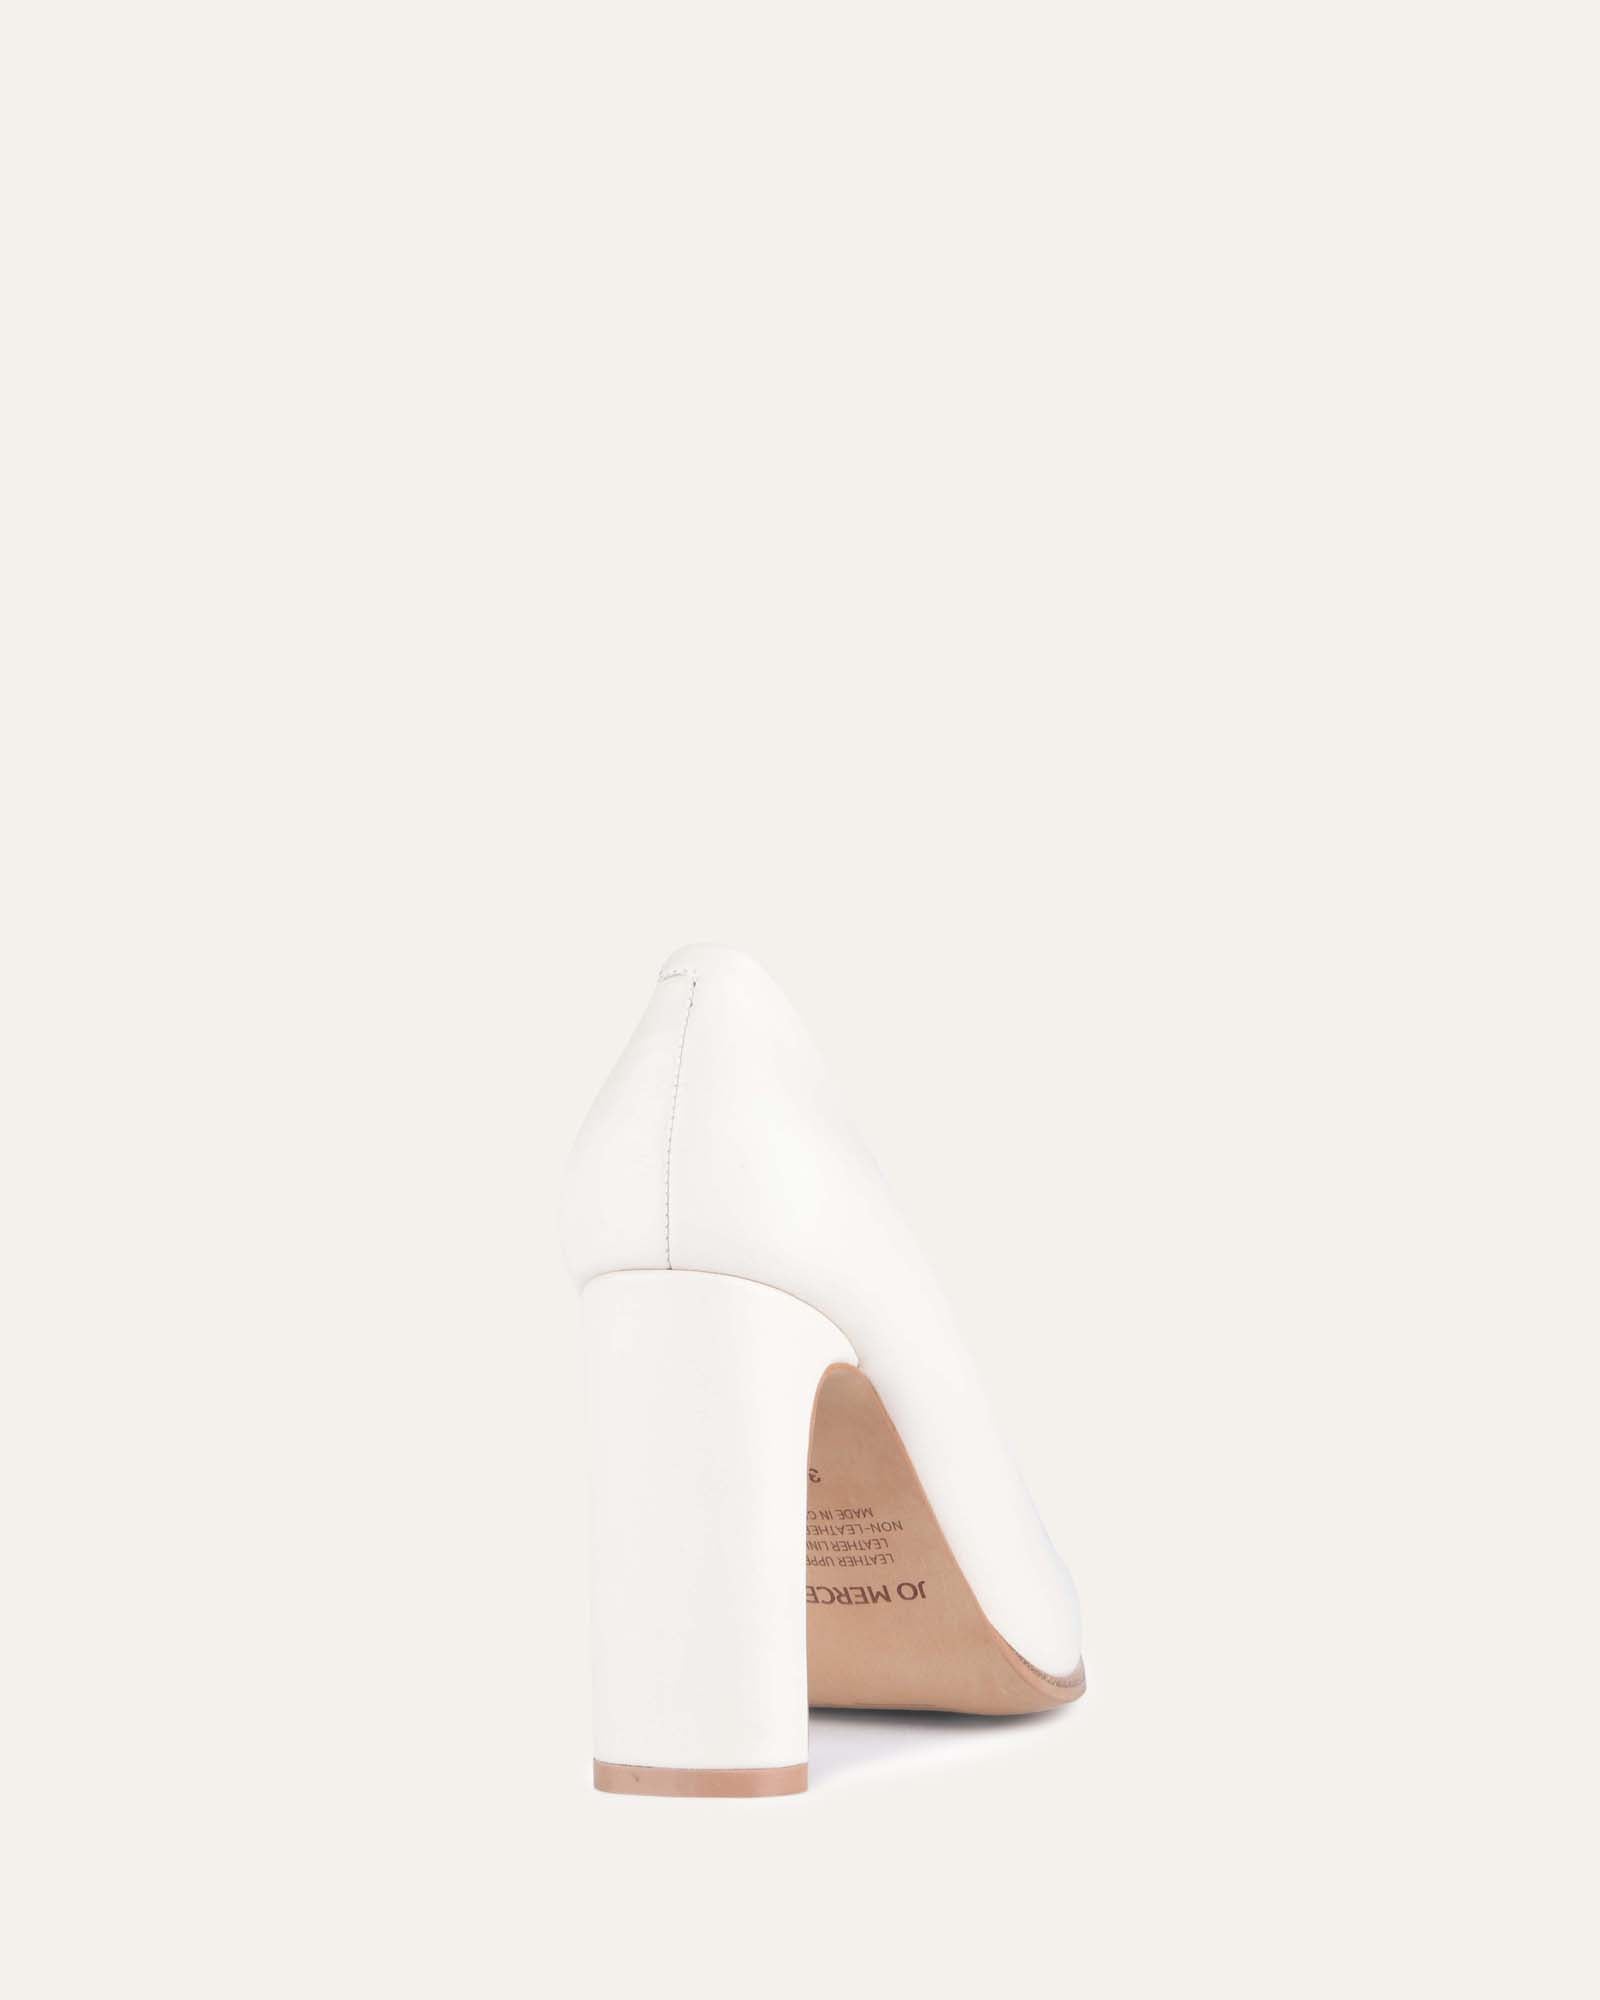 M.Y. #883-51 Slim Strap 2 inch block heels | Shopee Philippines